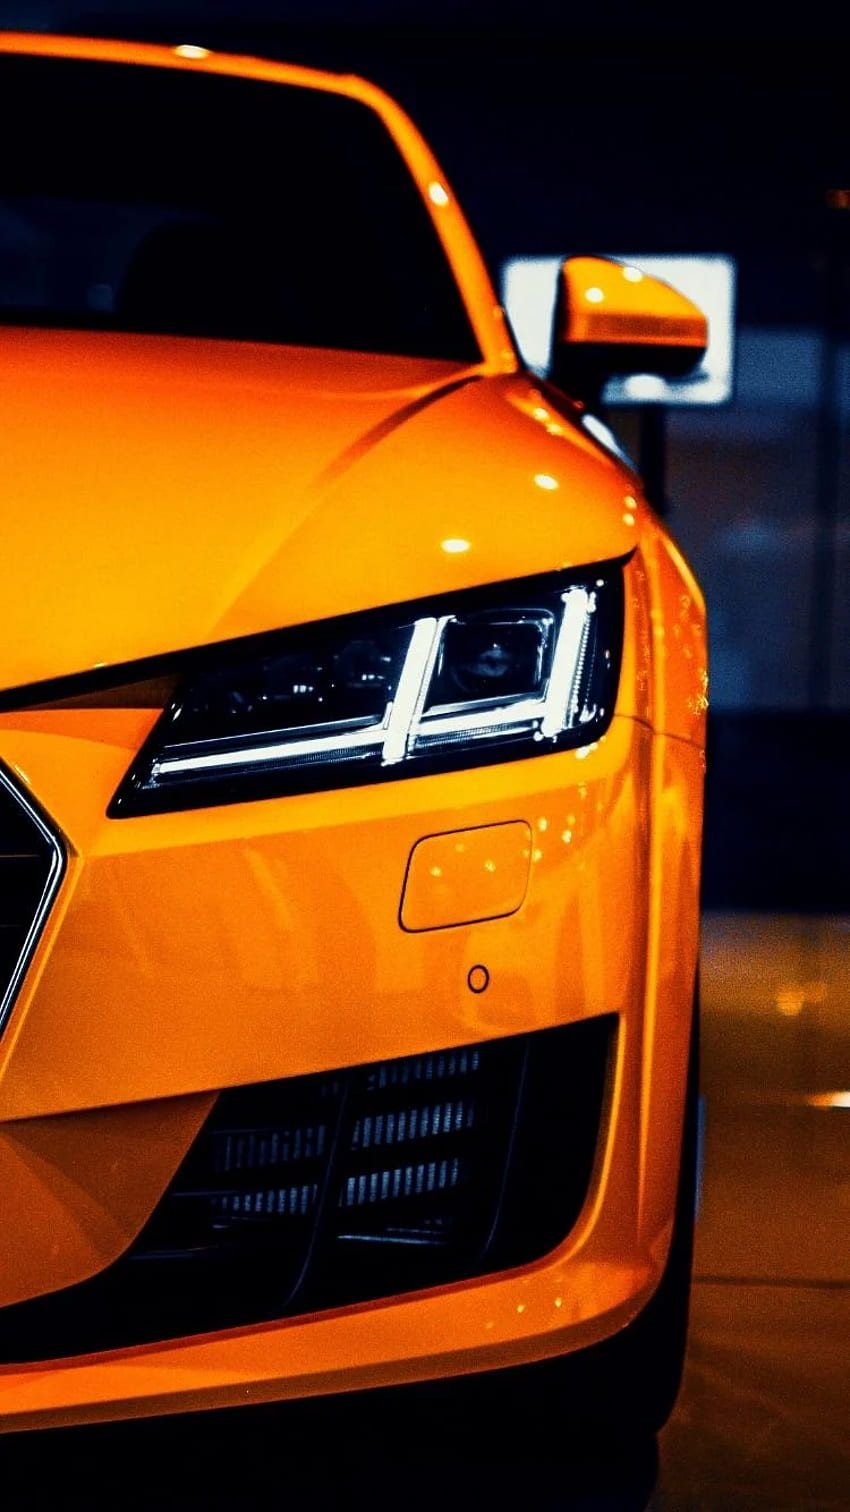 Audi tt Wallpapers, HD Audi tt Backgrounds, Free Images Download